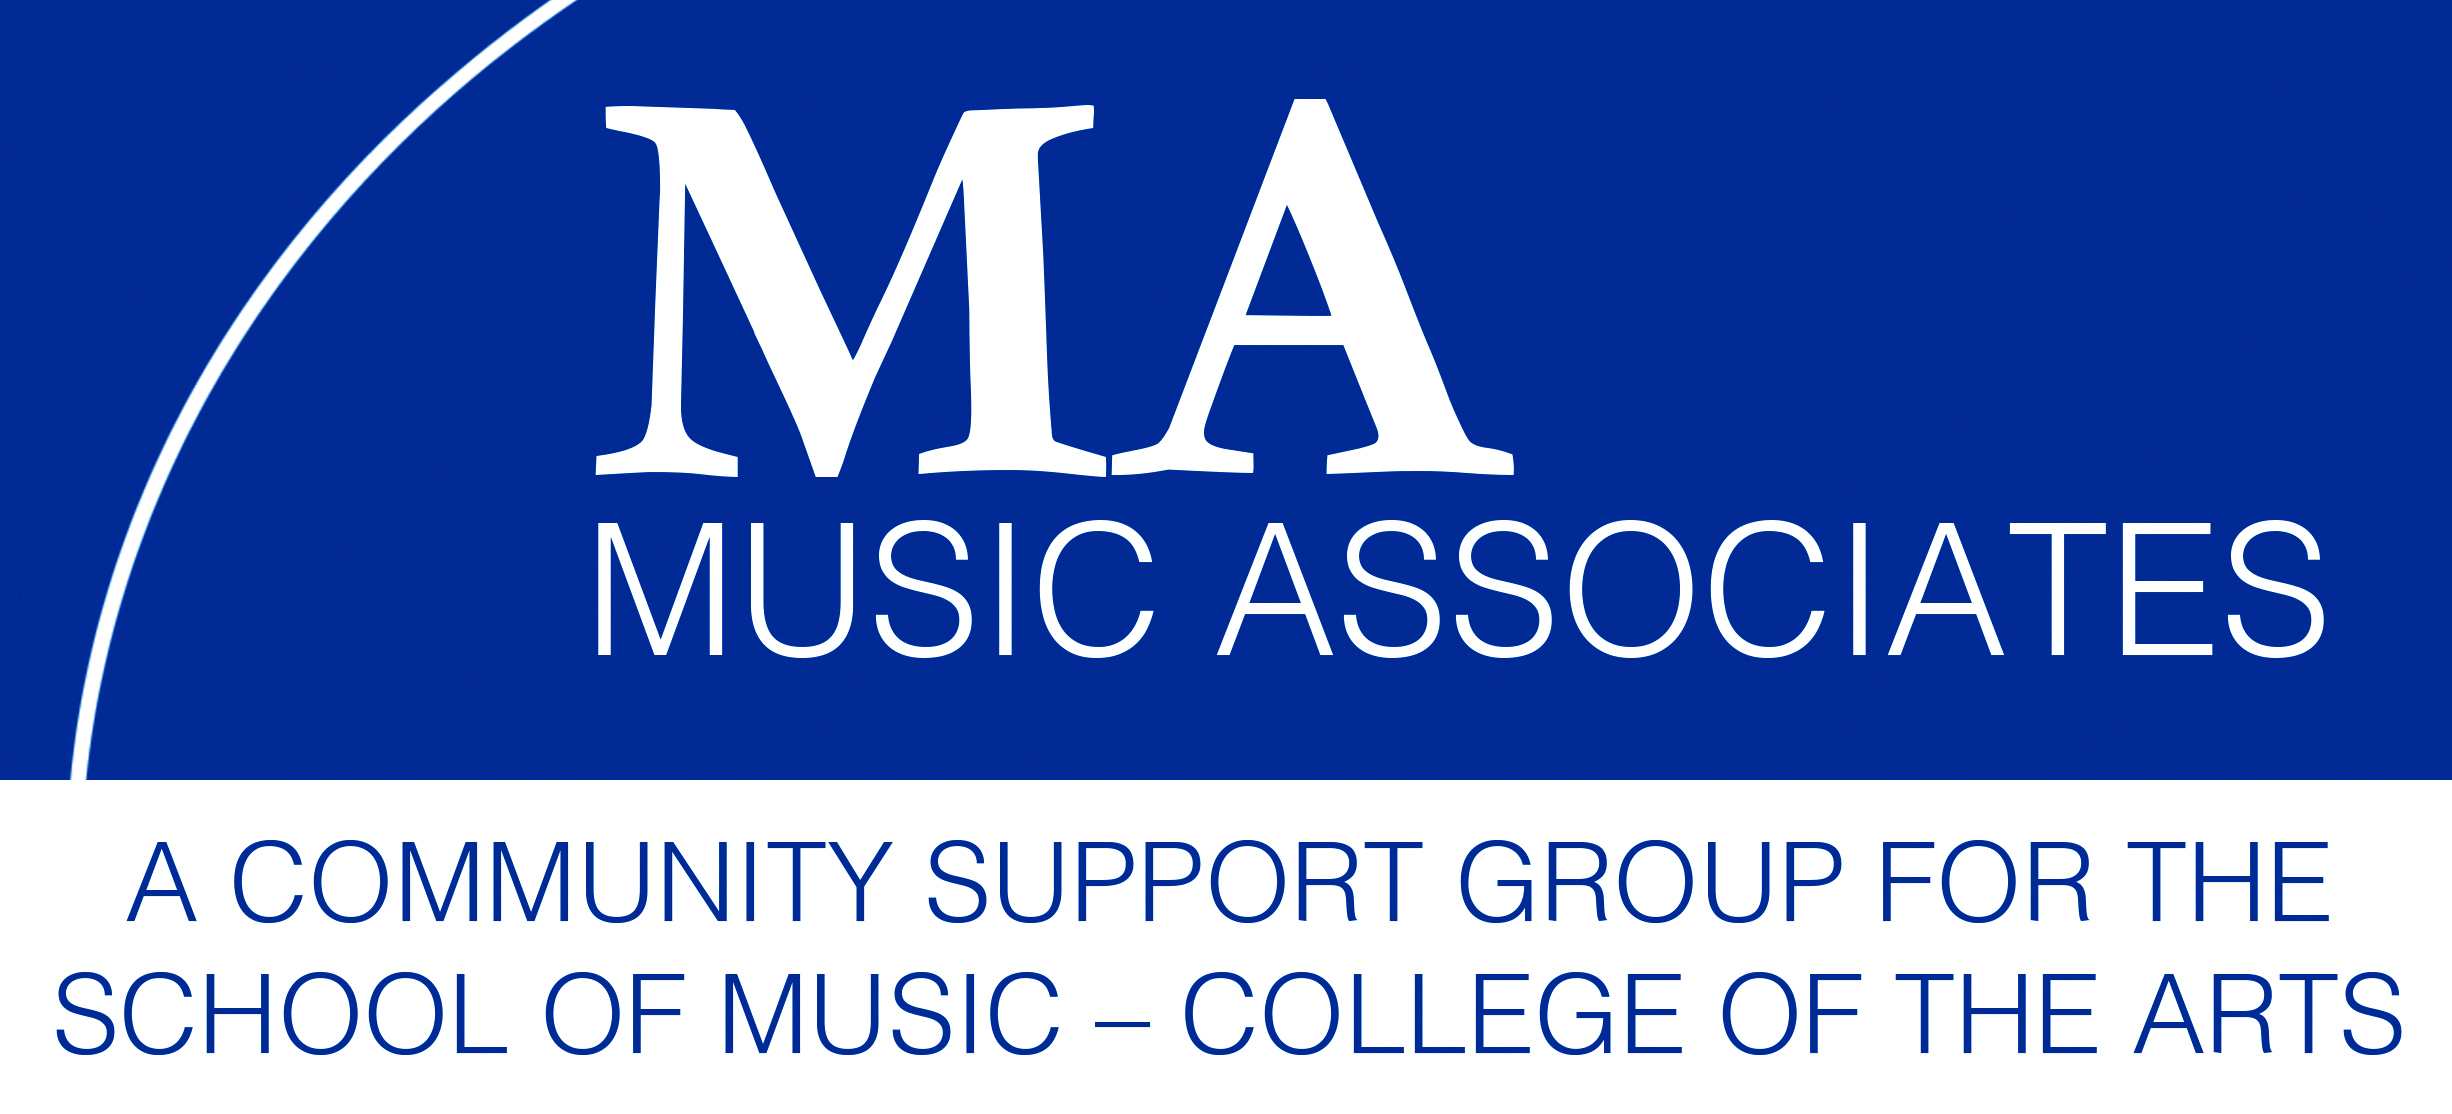 Music Associates logo